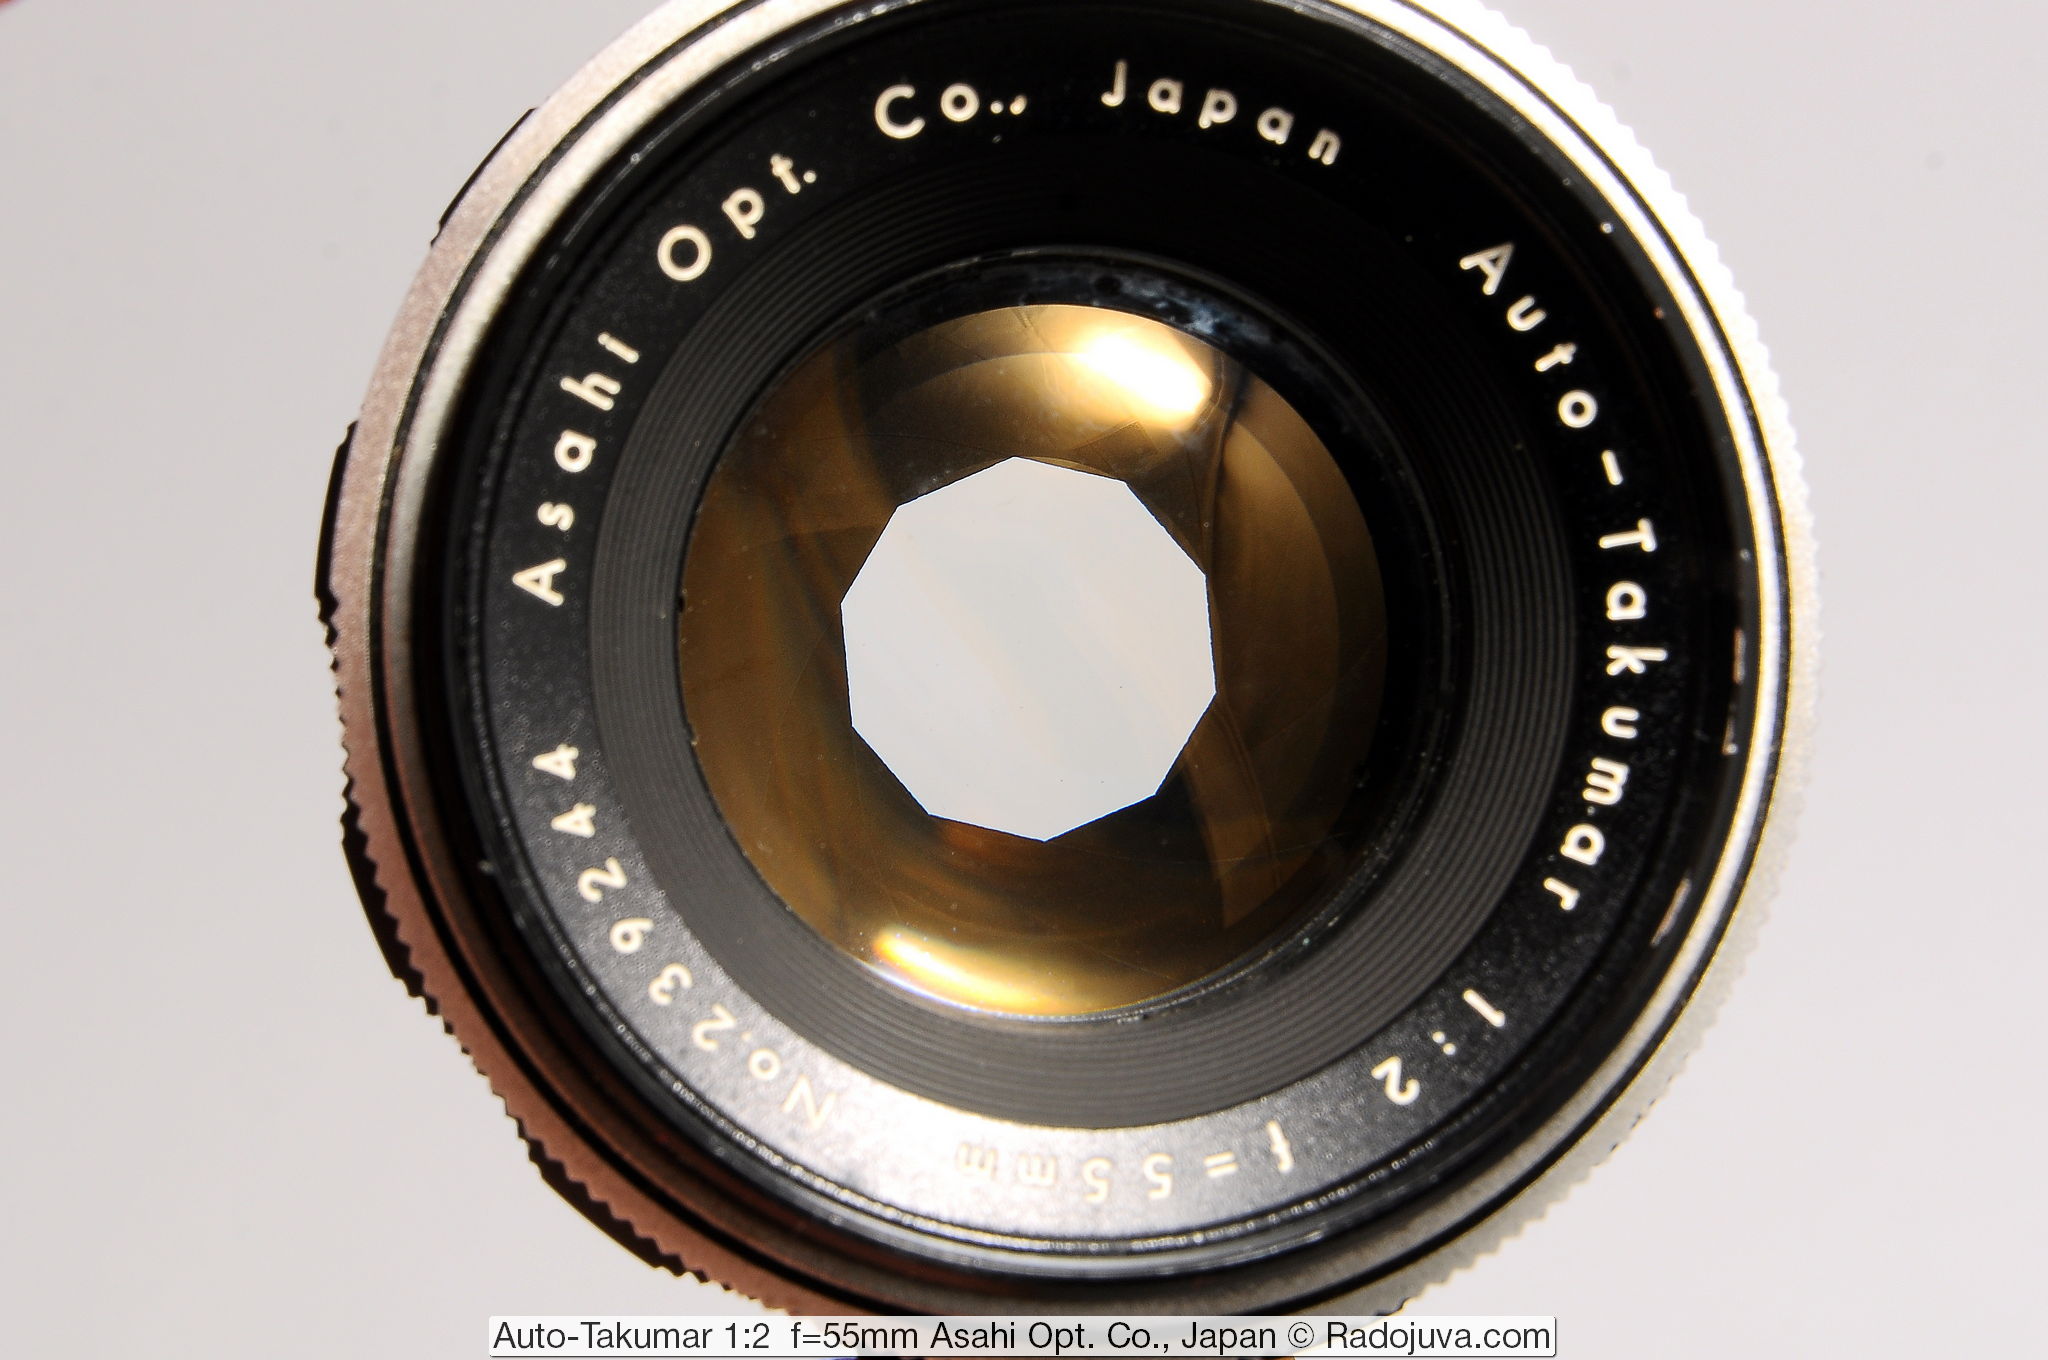 Auto-Takumar 1:2 f=55mm Asahi Opt. Co., Japan